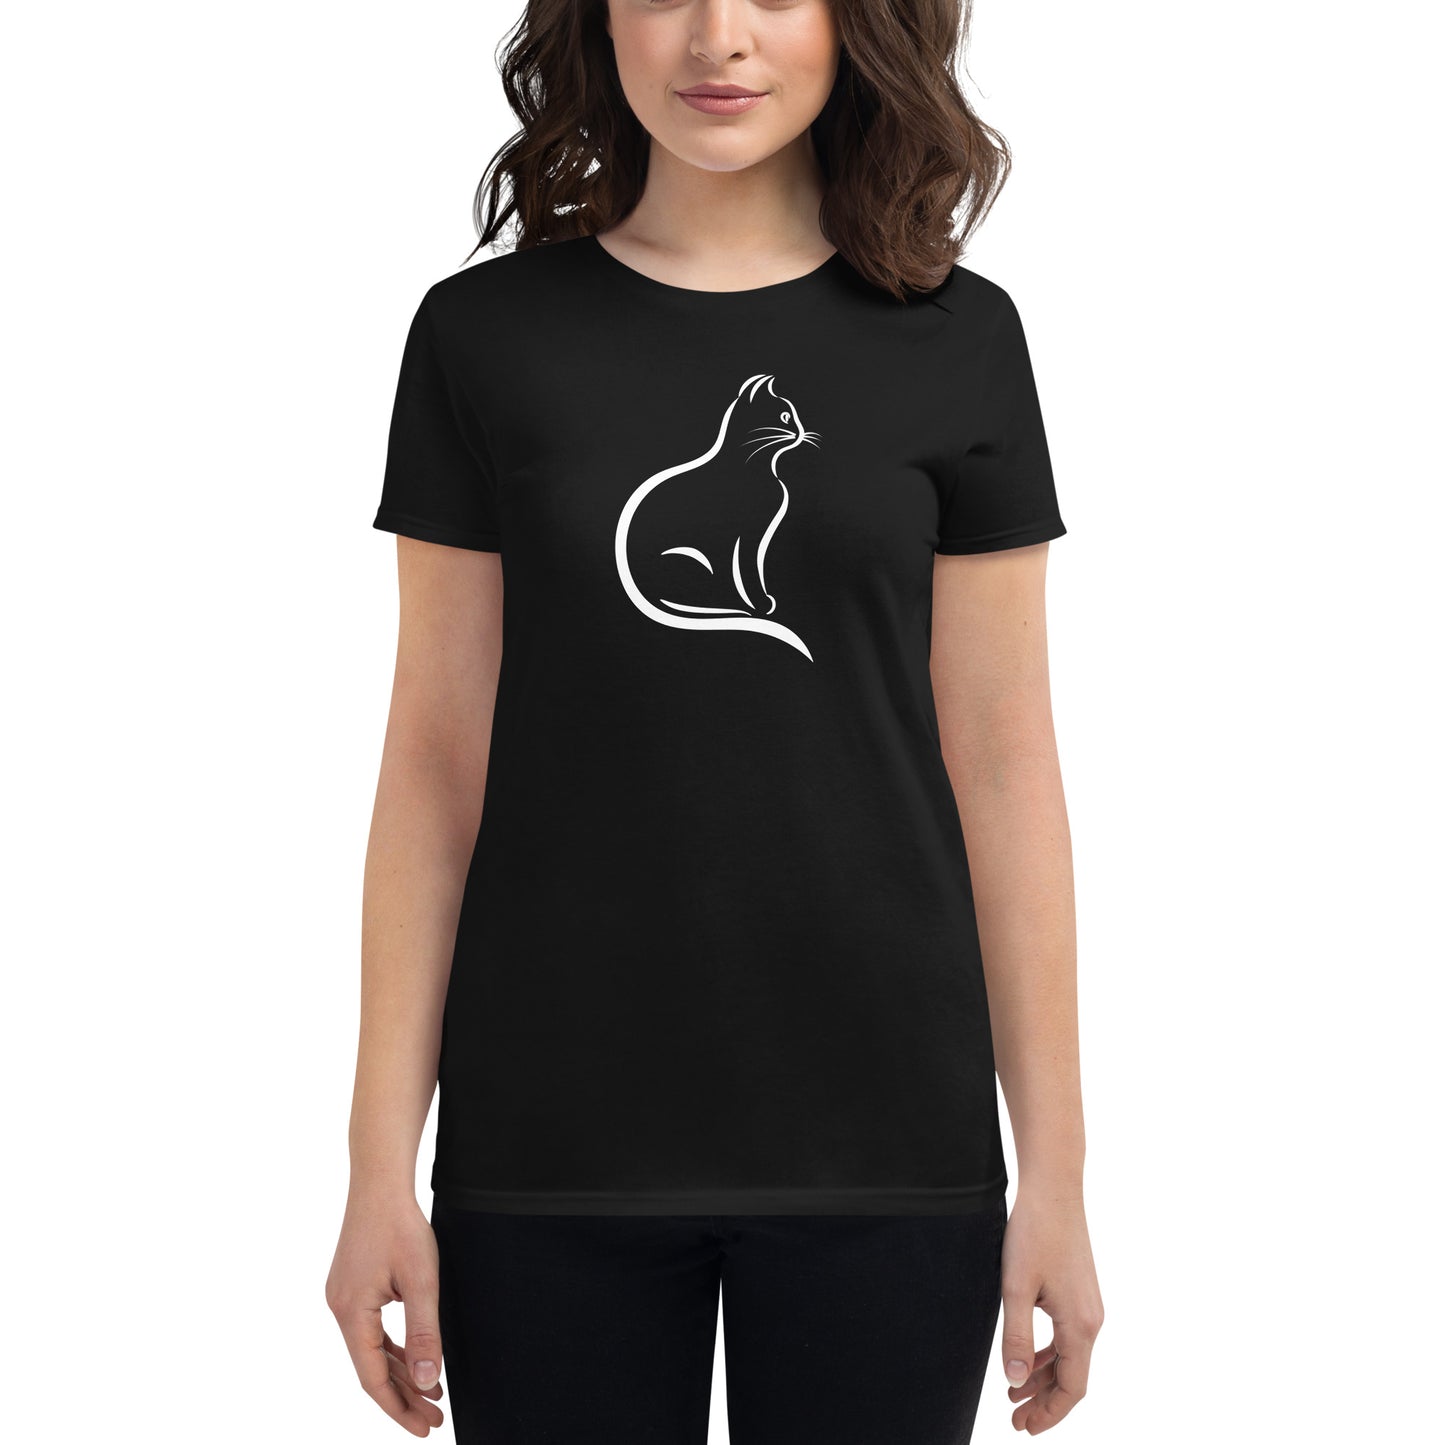 Women's short sleeve t-shirt, white and black cat